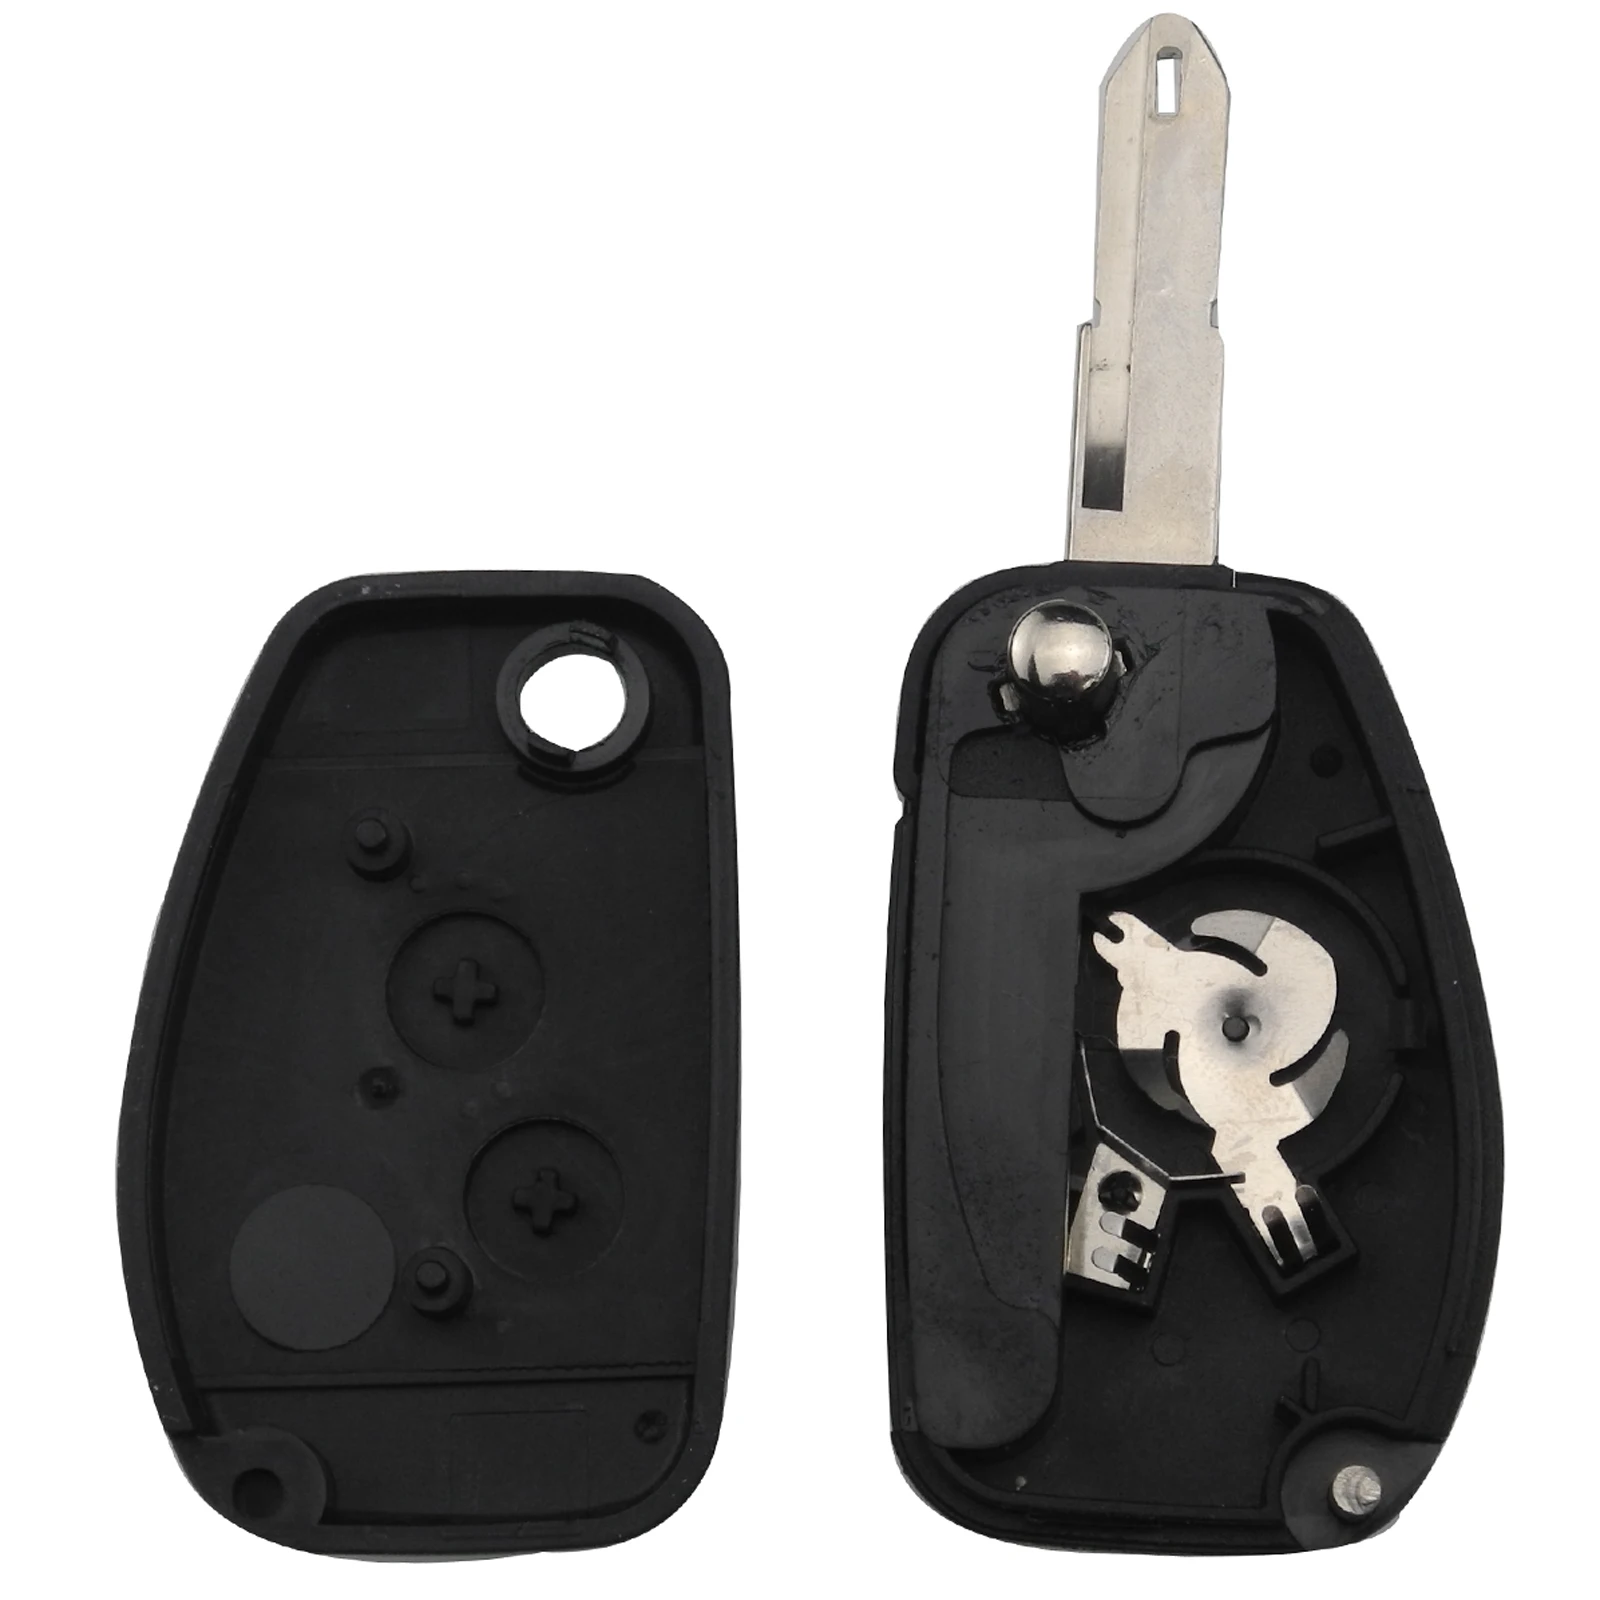 Jingyuqin модифицированный 2 кнопки дистанционного флип-ключа оболочки для Renault Megane модус Espace Лагуна Duster Logan DACIA Sandero Clio Fob